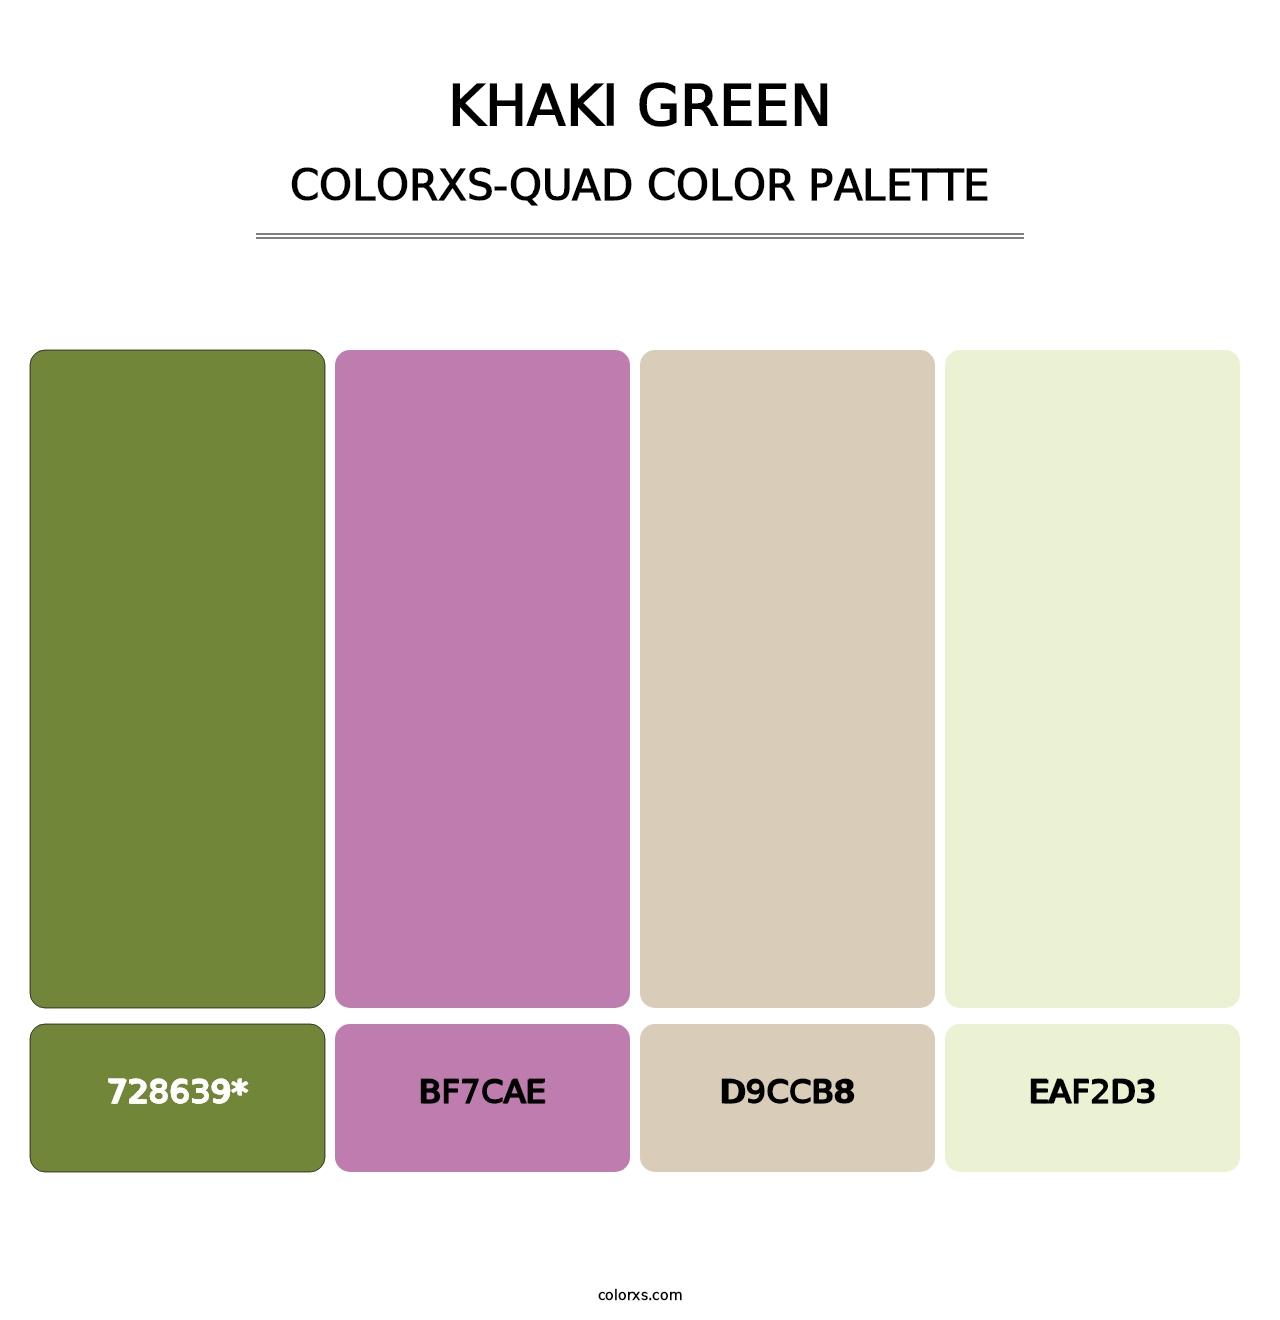 Khaki Green - Colorxs Quad Palette